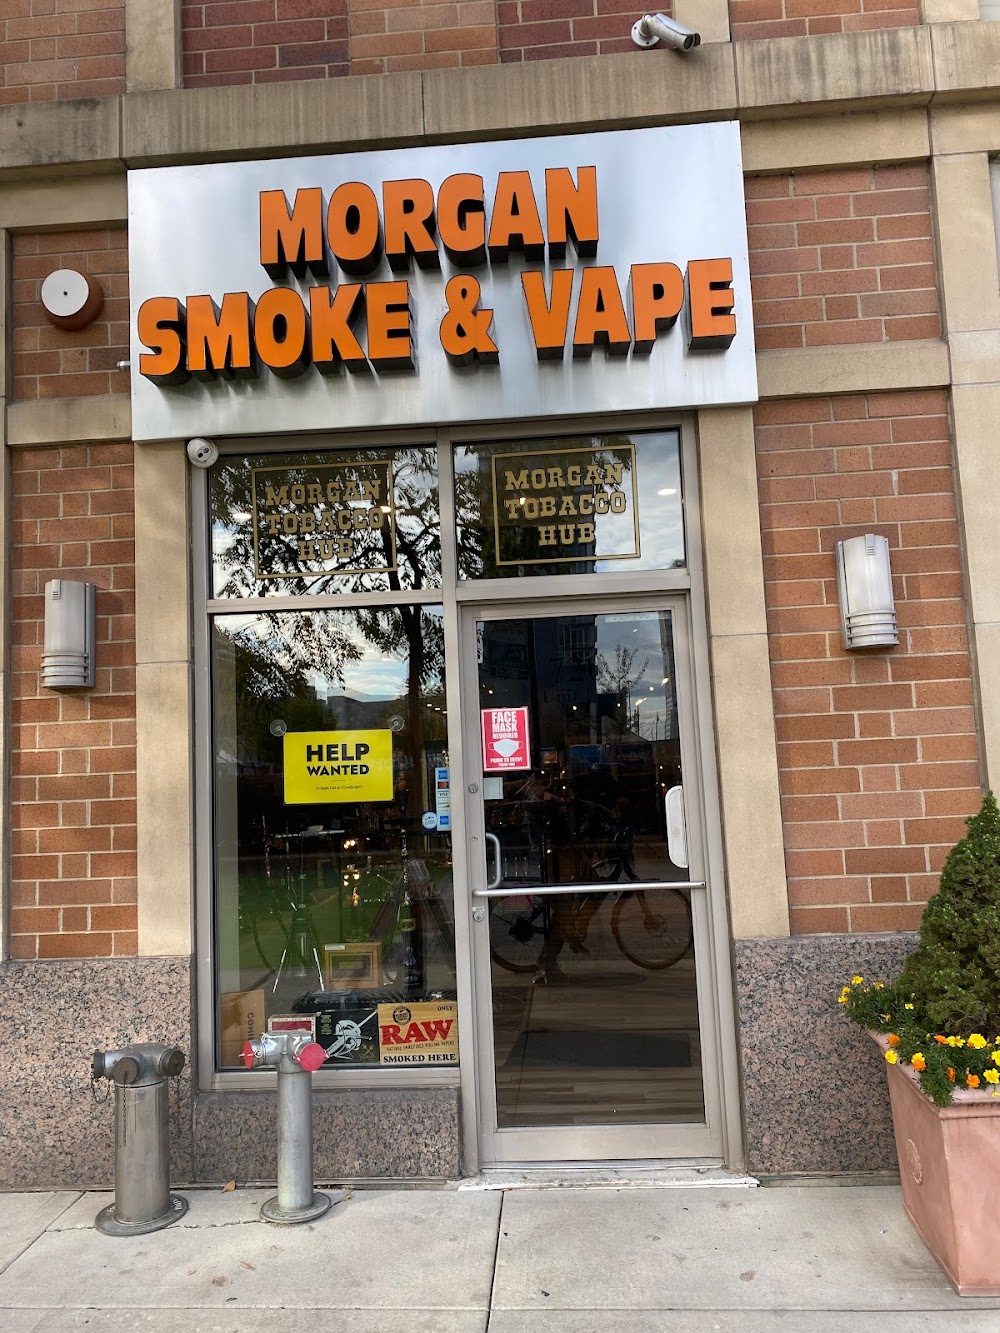 Morgan smoke & vape